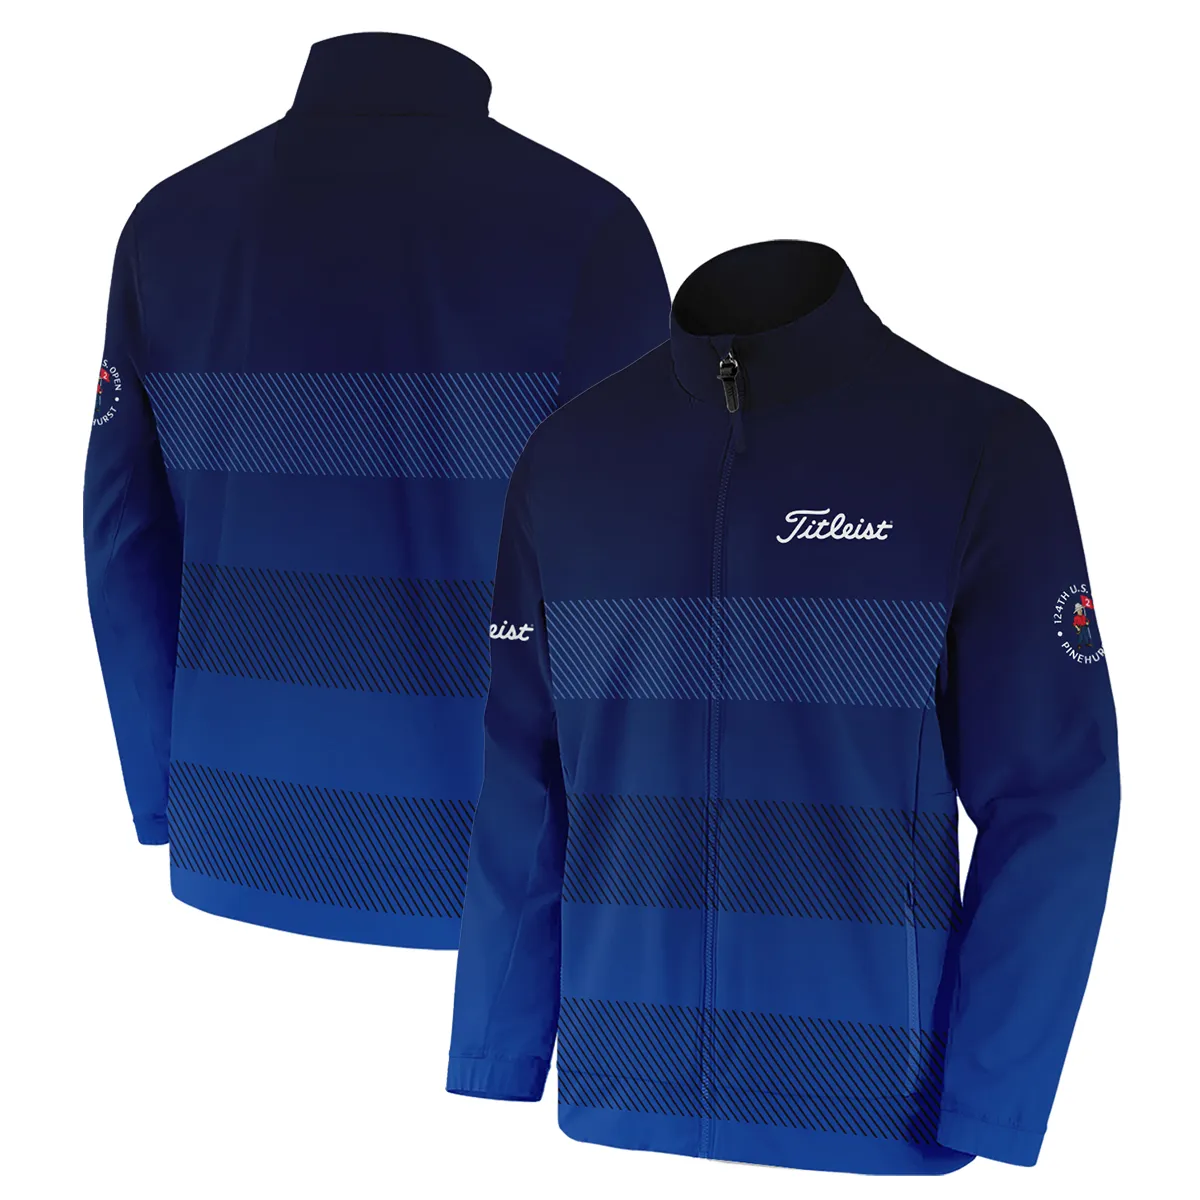 Titleist 124th U.S. Open Pinehurst Stand Colar Jacket Sports Dark Blue Gradient Striped Pattern All Over Print Stand Colar Jacket